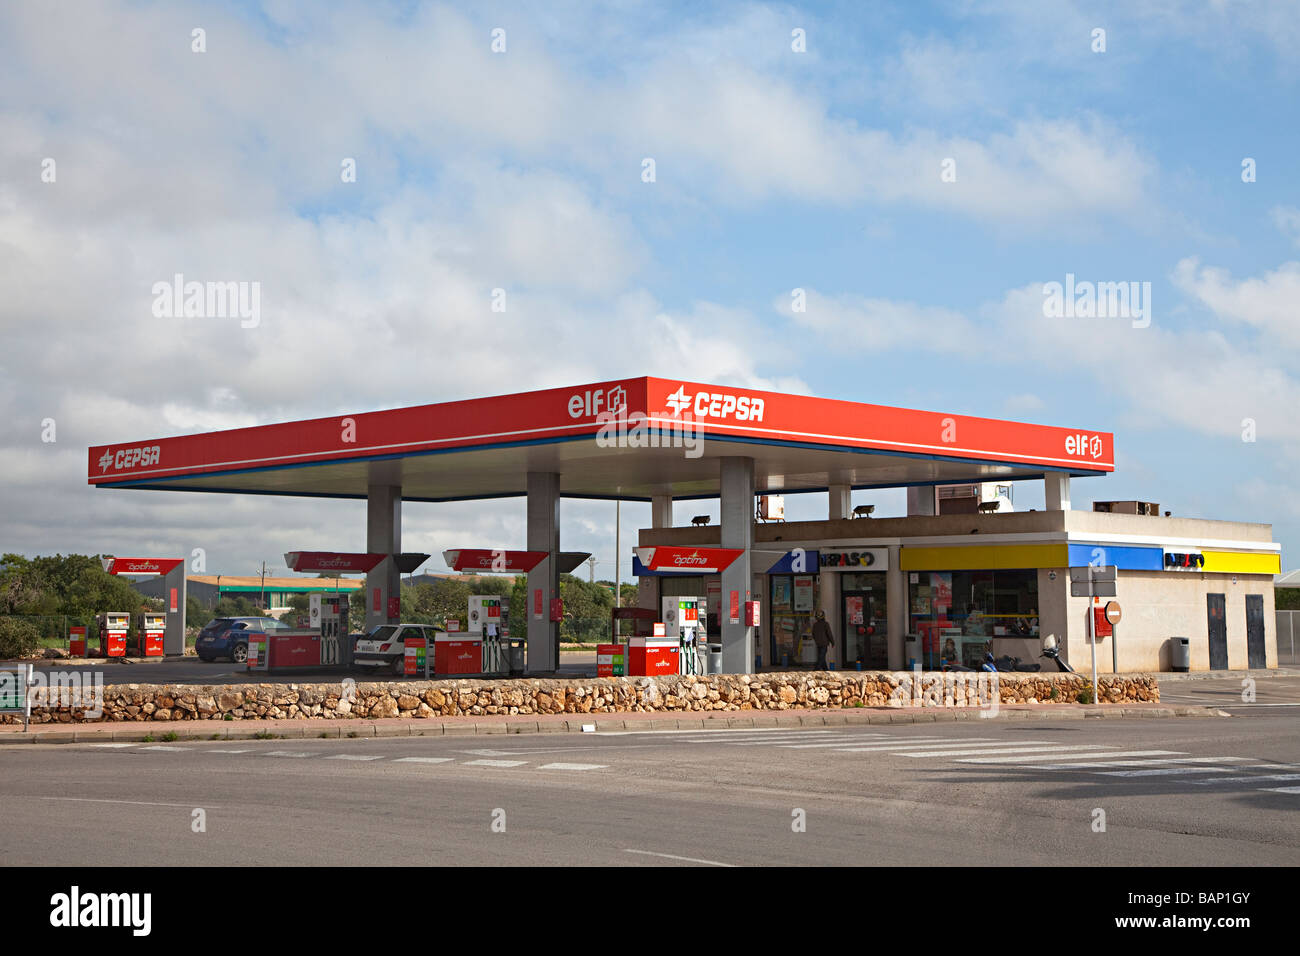 Petrol filling station Cepsa Elf fuel Mallorca Spain Stock Photo